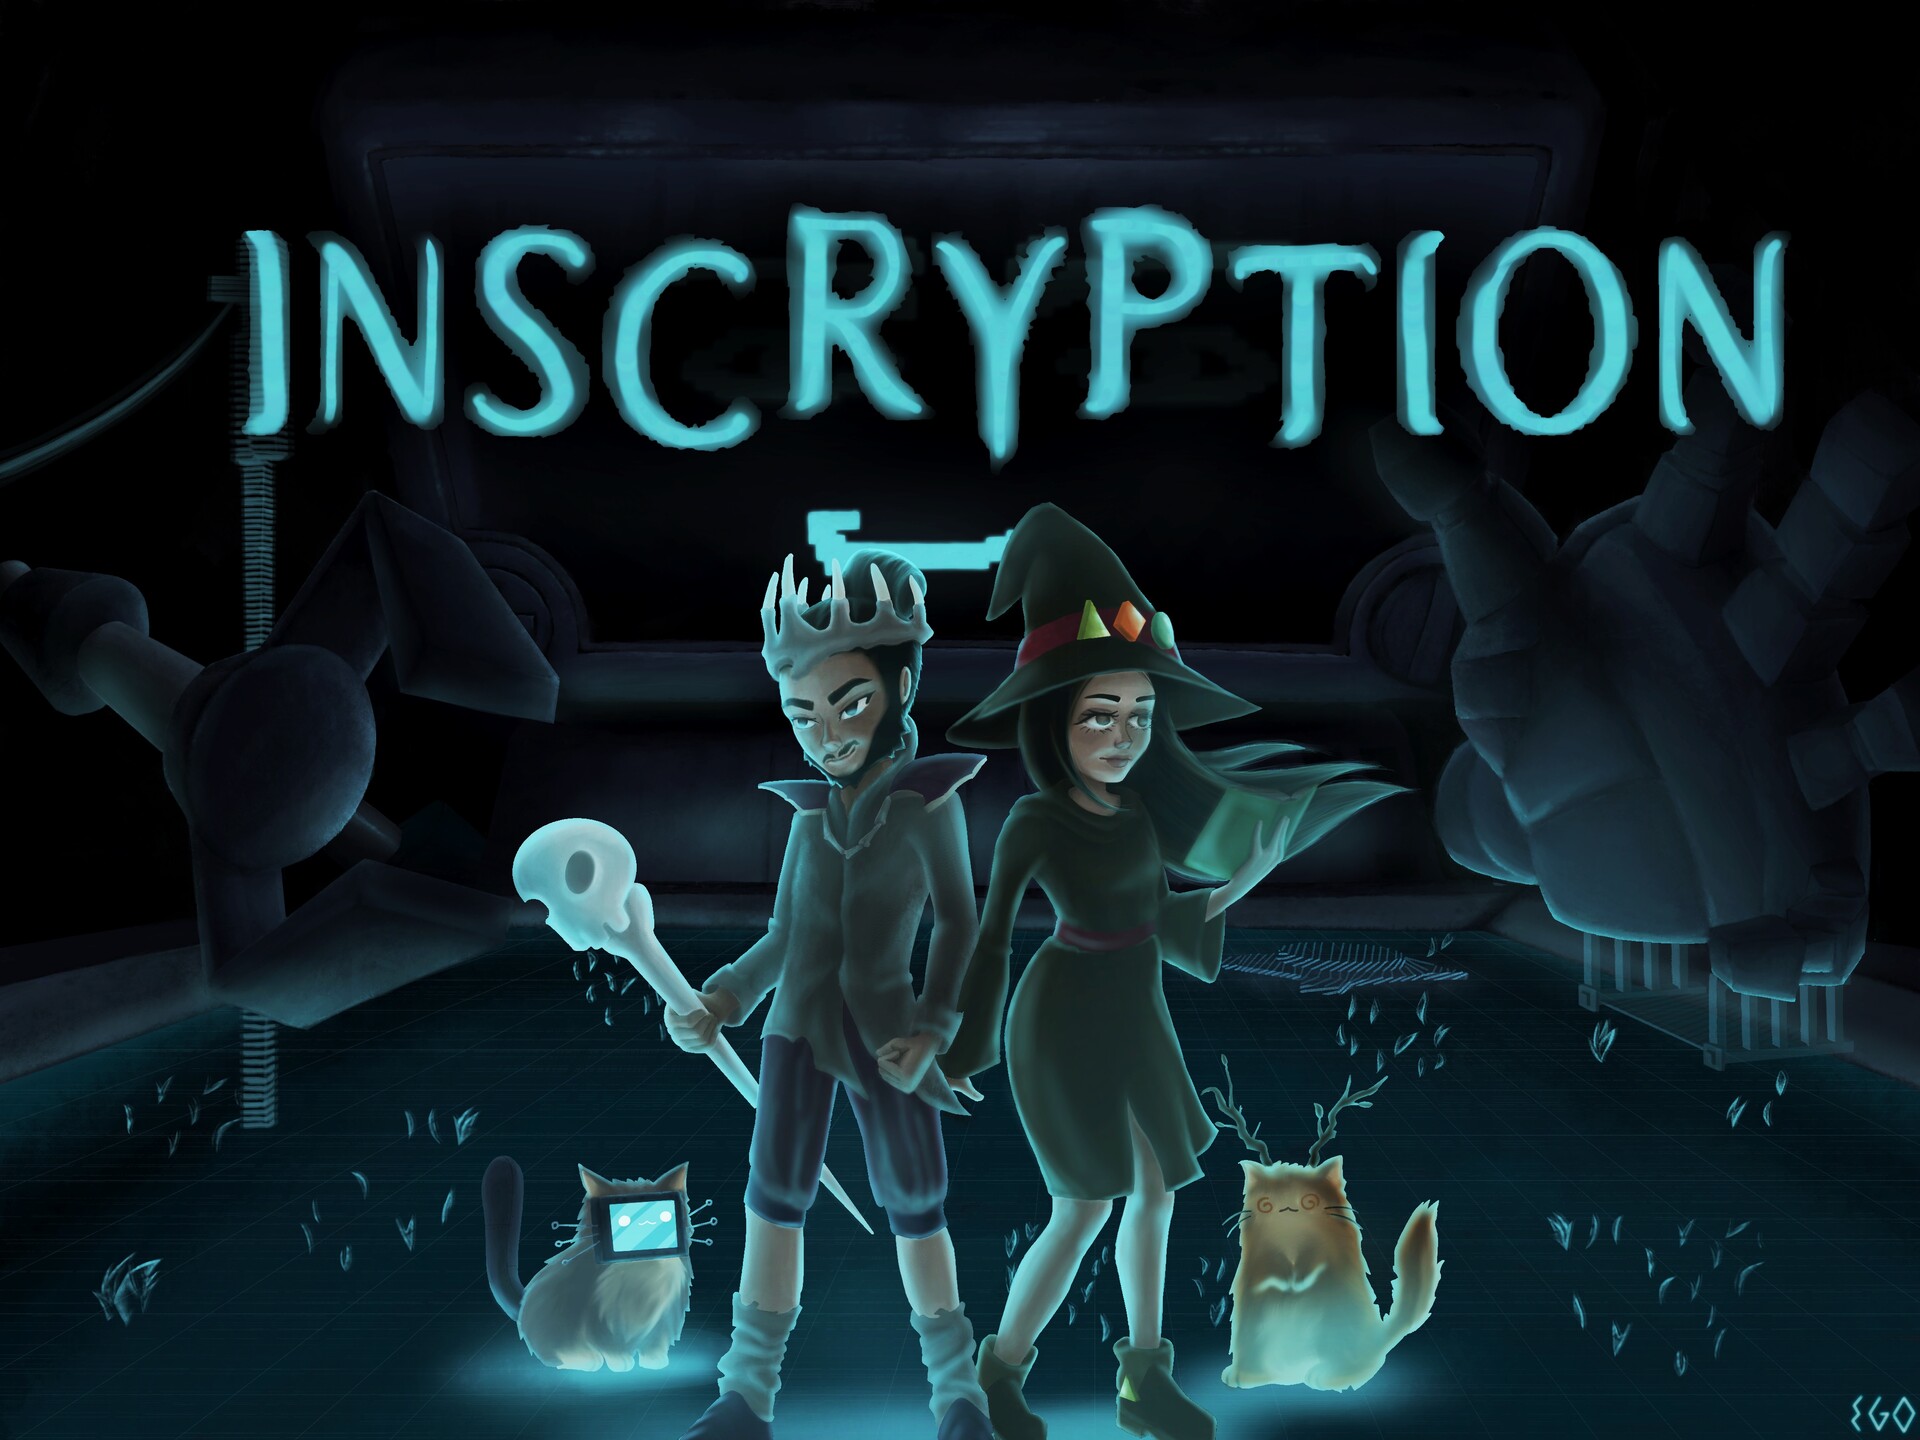 inscryption #inscryptionfanart #inscryptionart #inscryptiongame  #inscyptionleshy #inscryptiongrimora #inscryptionp03…